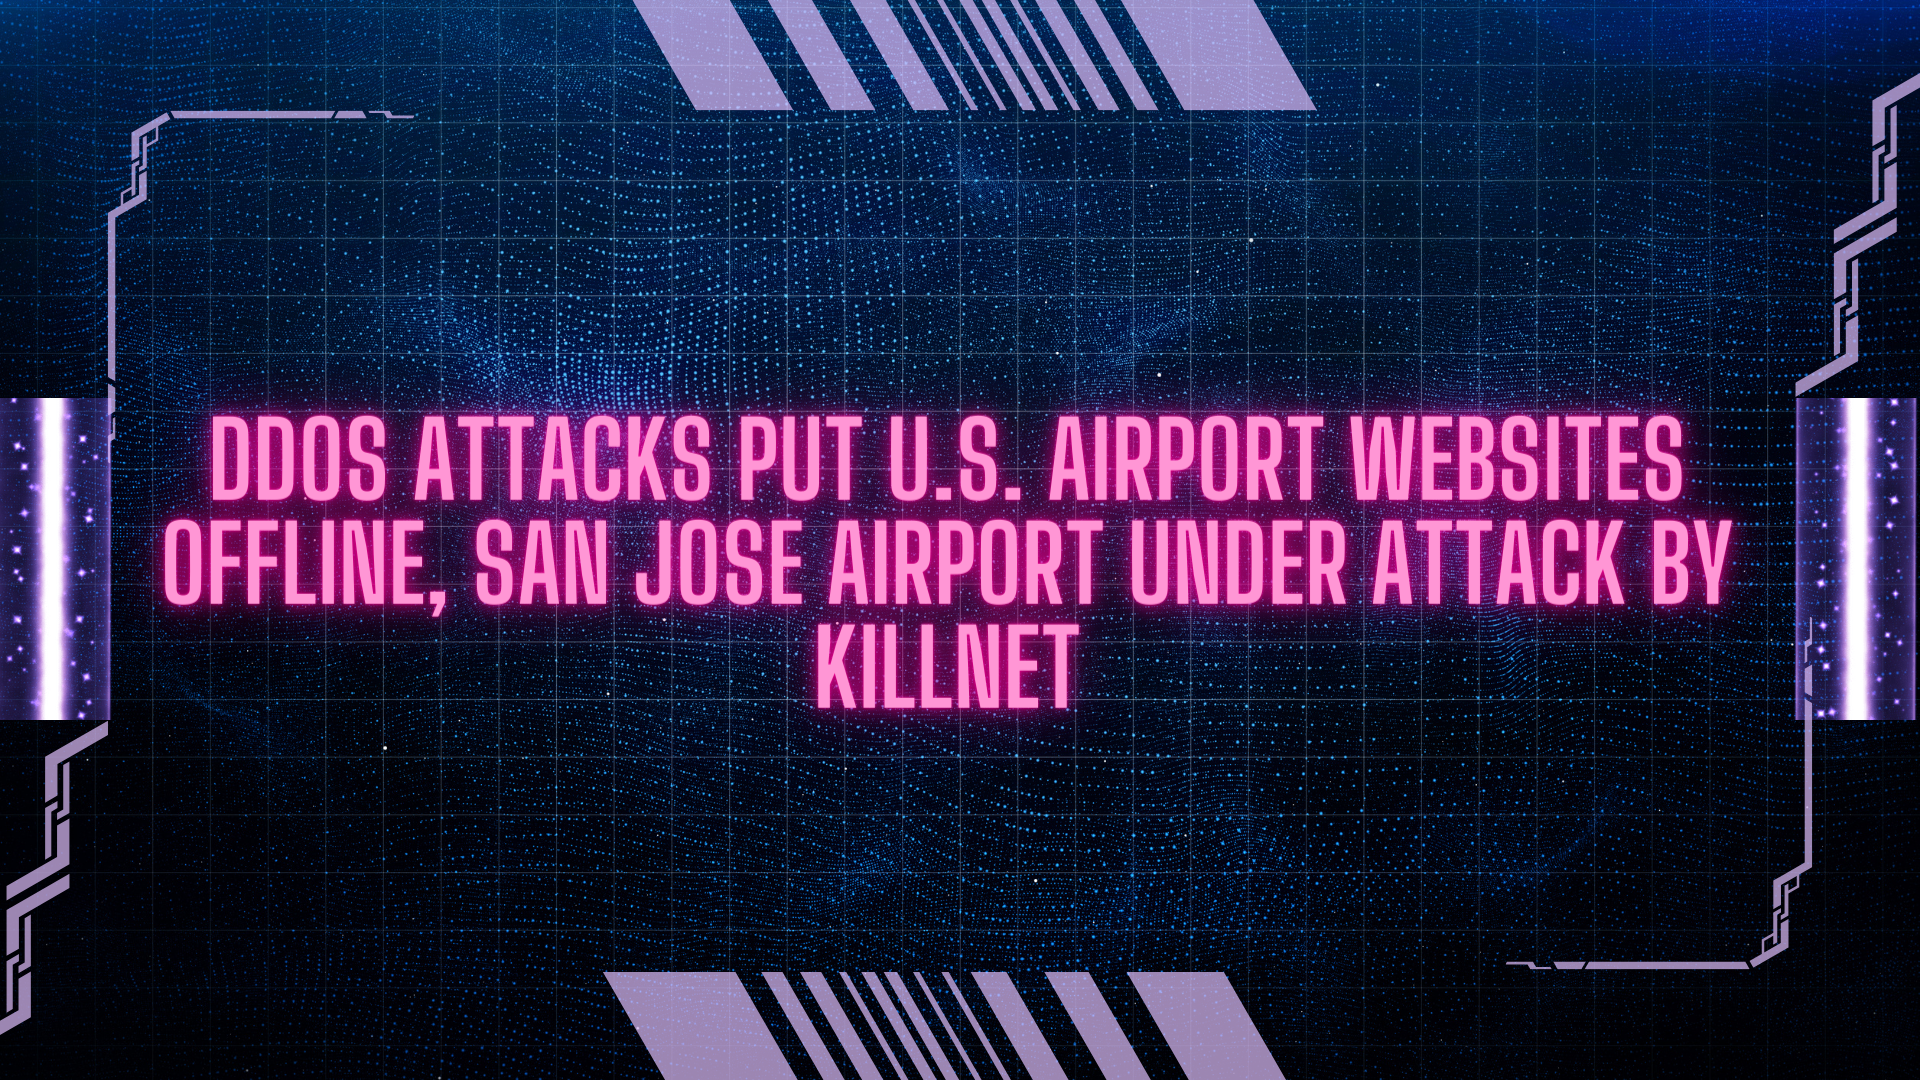 DDoS Attacks Put U.S. Airport Websites Offline, San Jose Airport Under Attack by KIllnet